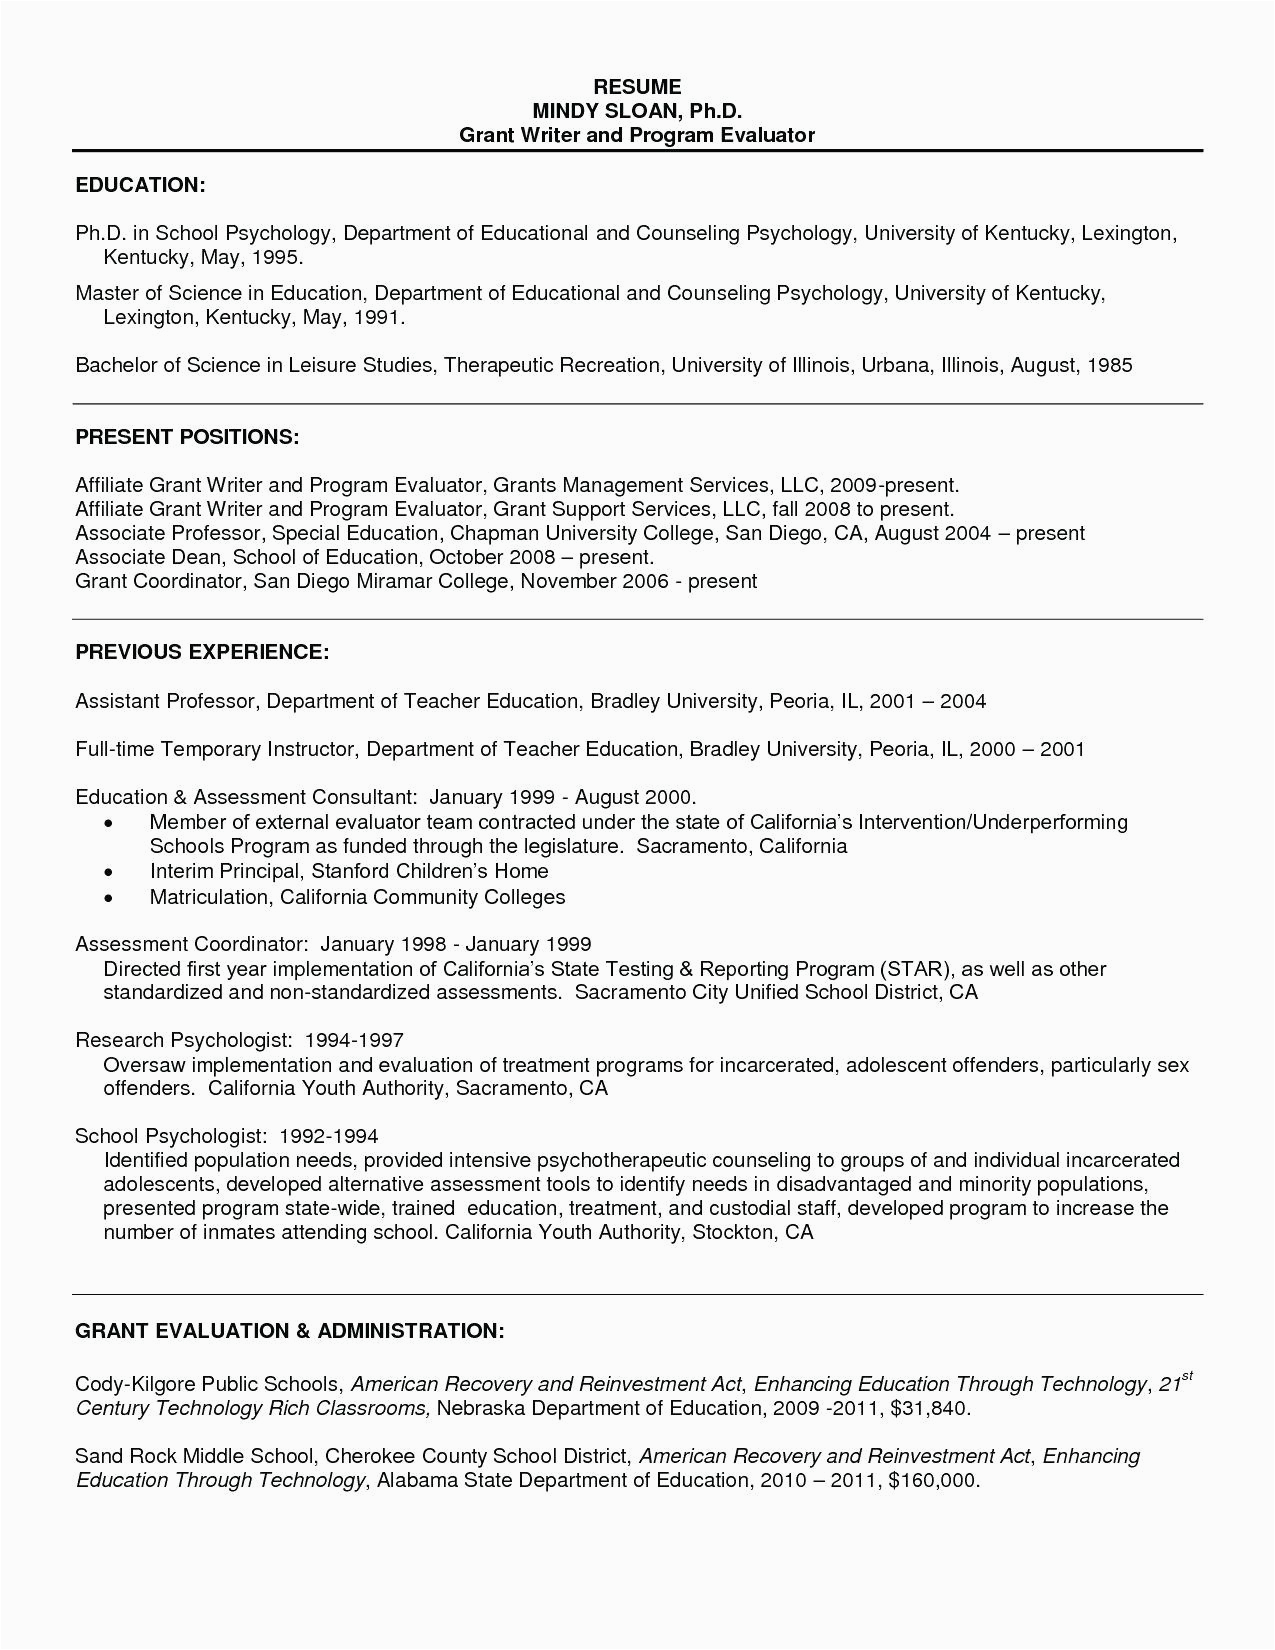 Academic Resume Template for Grad School Grad School Resume Resume Templates for Masters Program